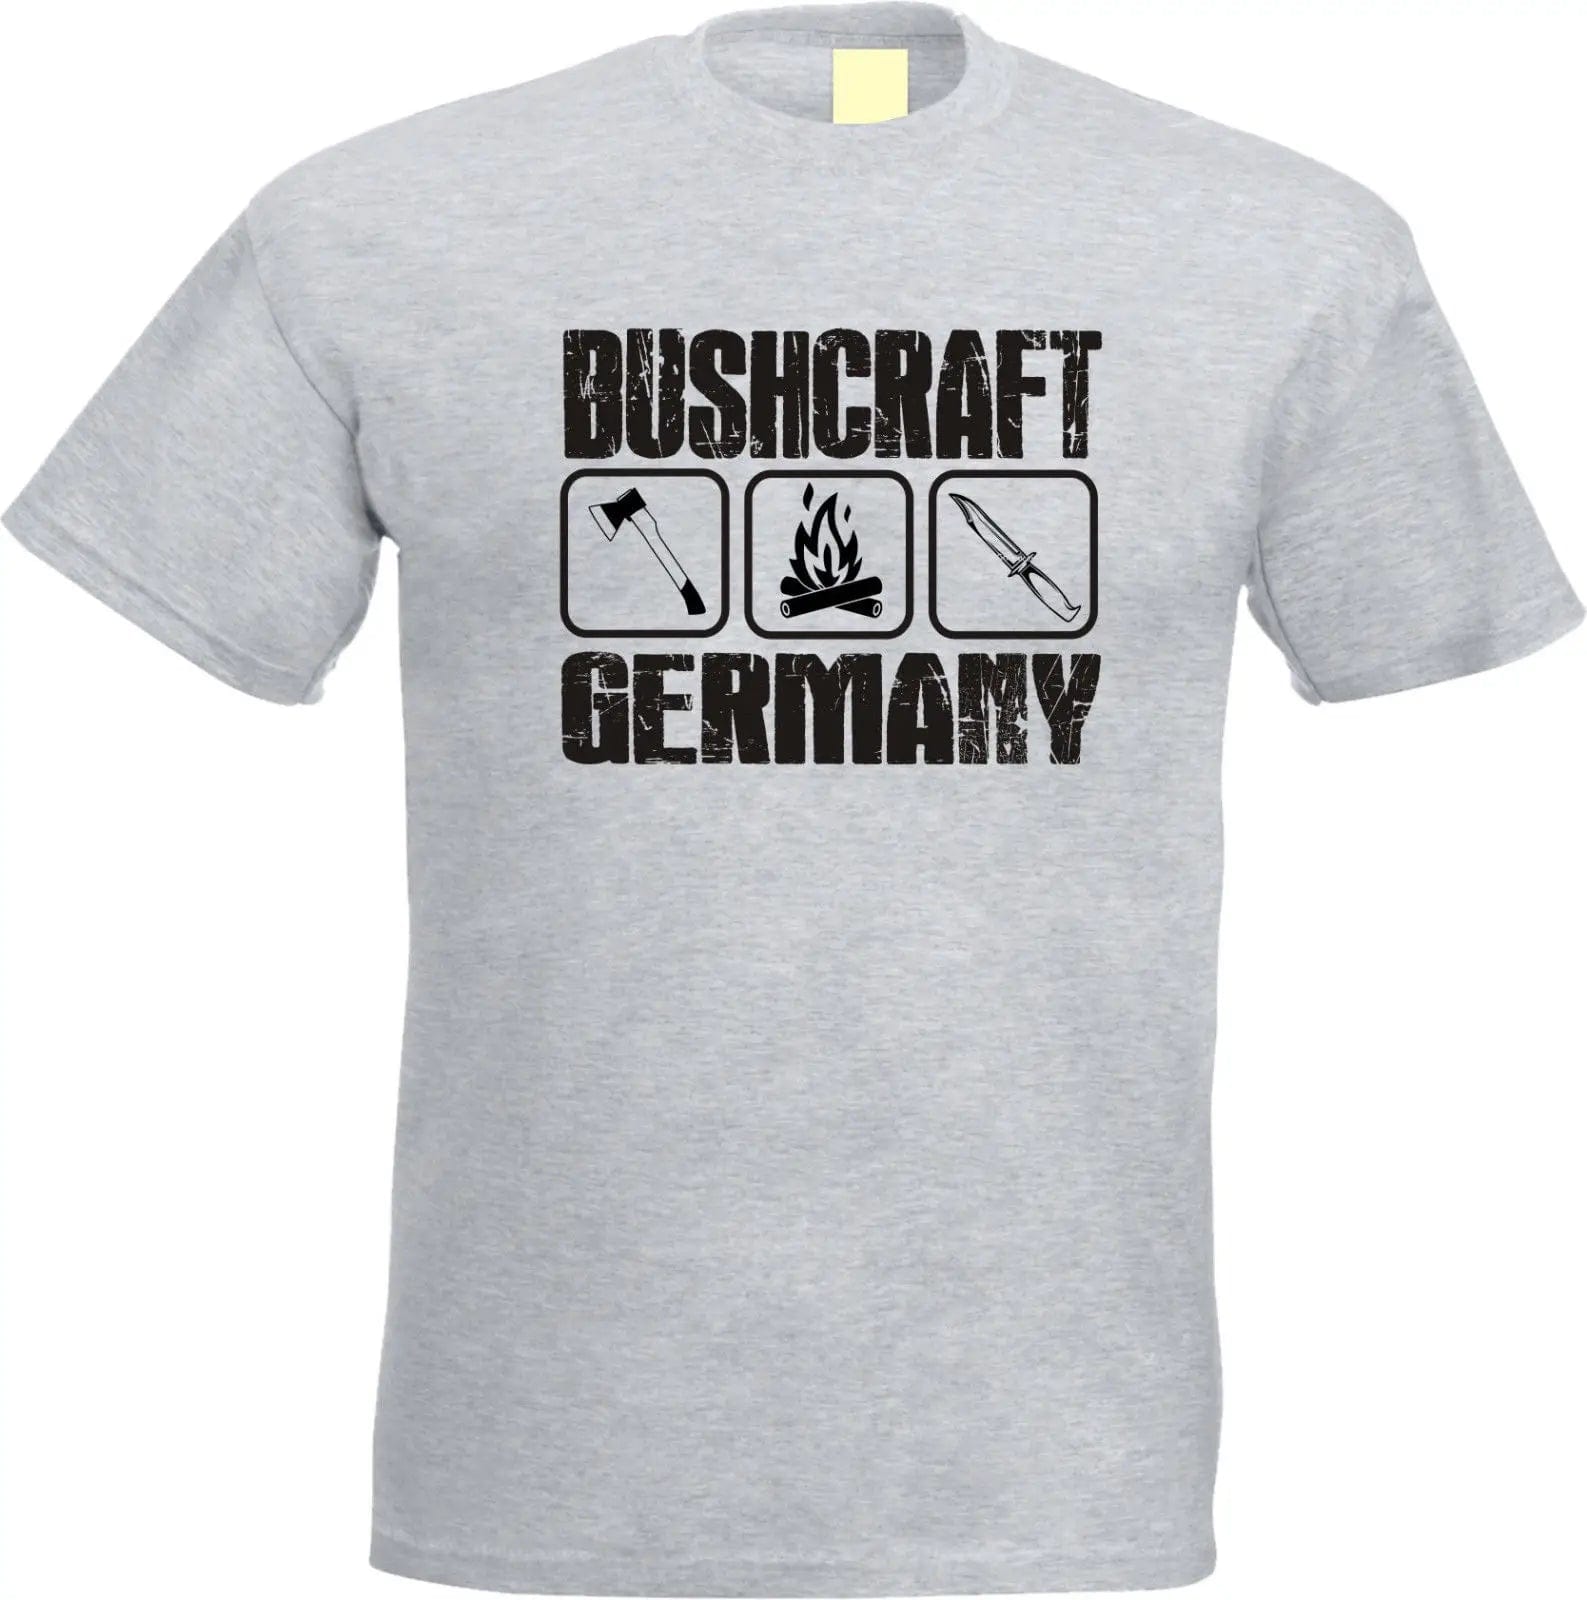 T-Shirt "Bushcraft Germany" / Outdoorkleidung 3 / S prepper-store.com